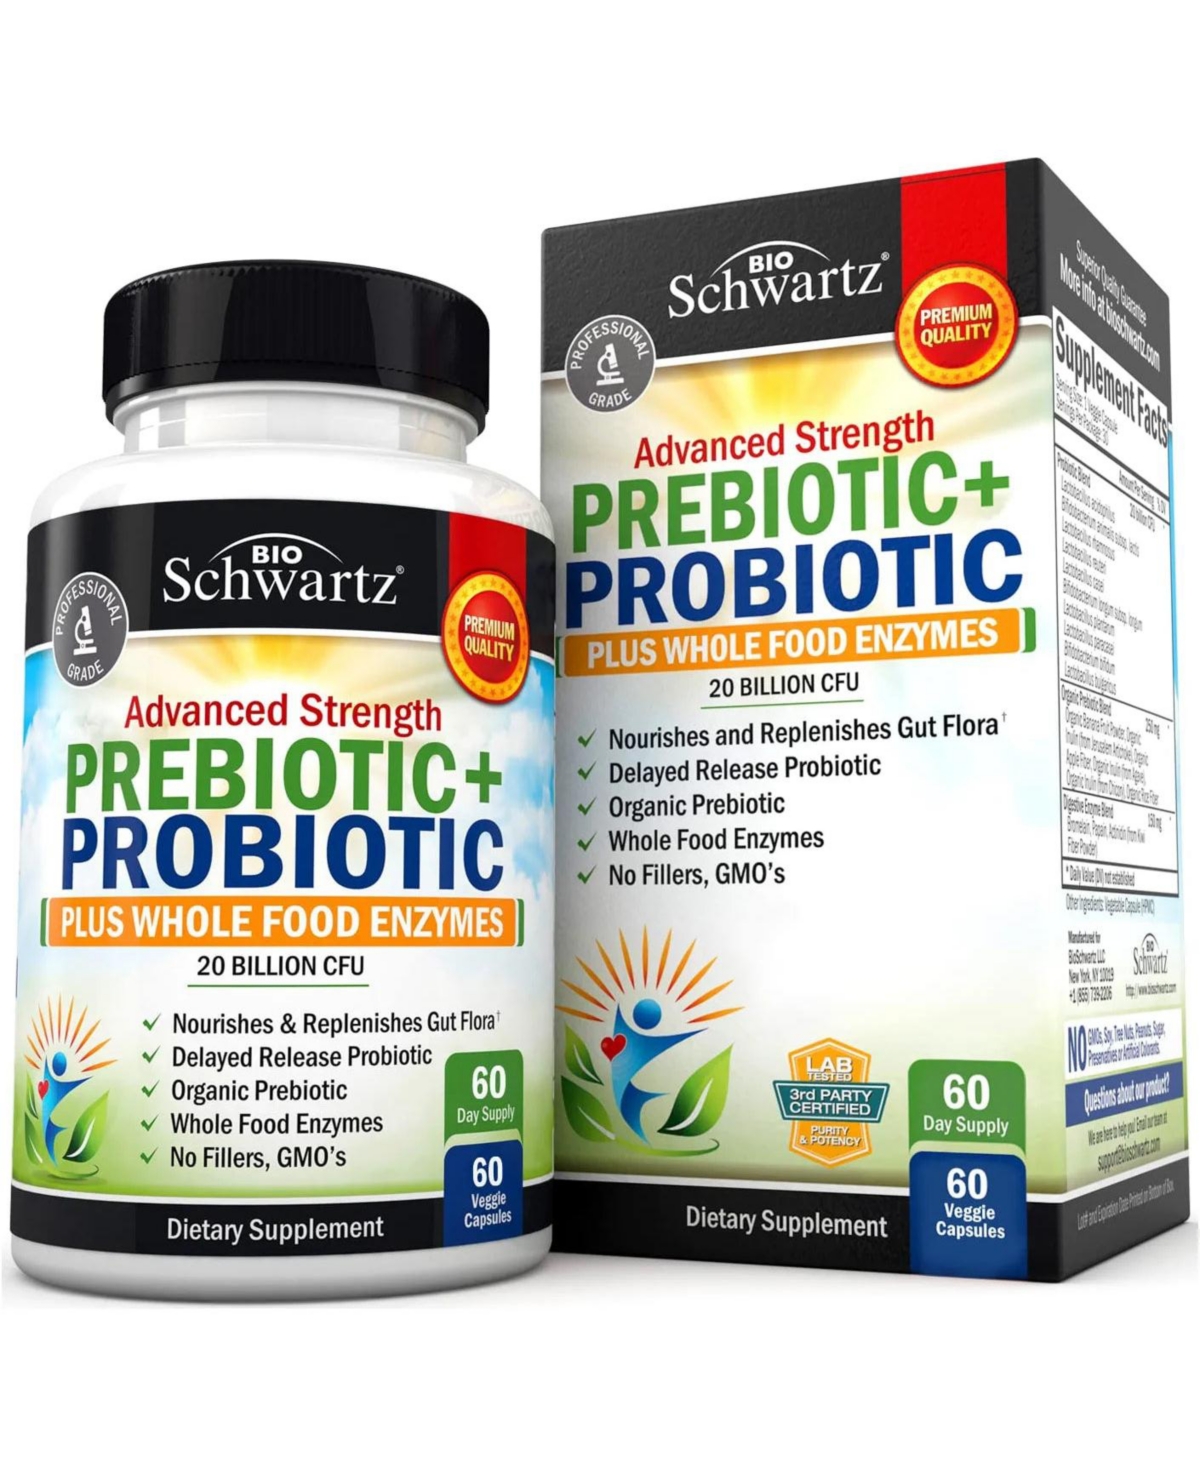 Prebiotics & Probiotics with Whole Food Enzymes - Digestive Health - Non-gmo, Gluten & Dairy Free, 60ct